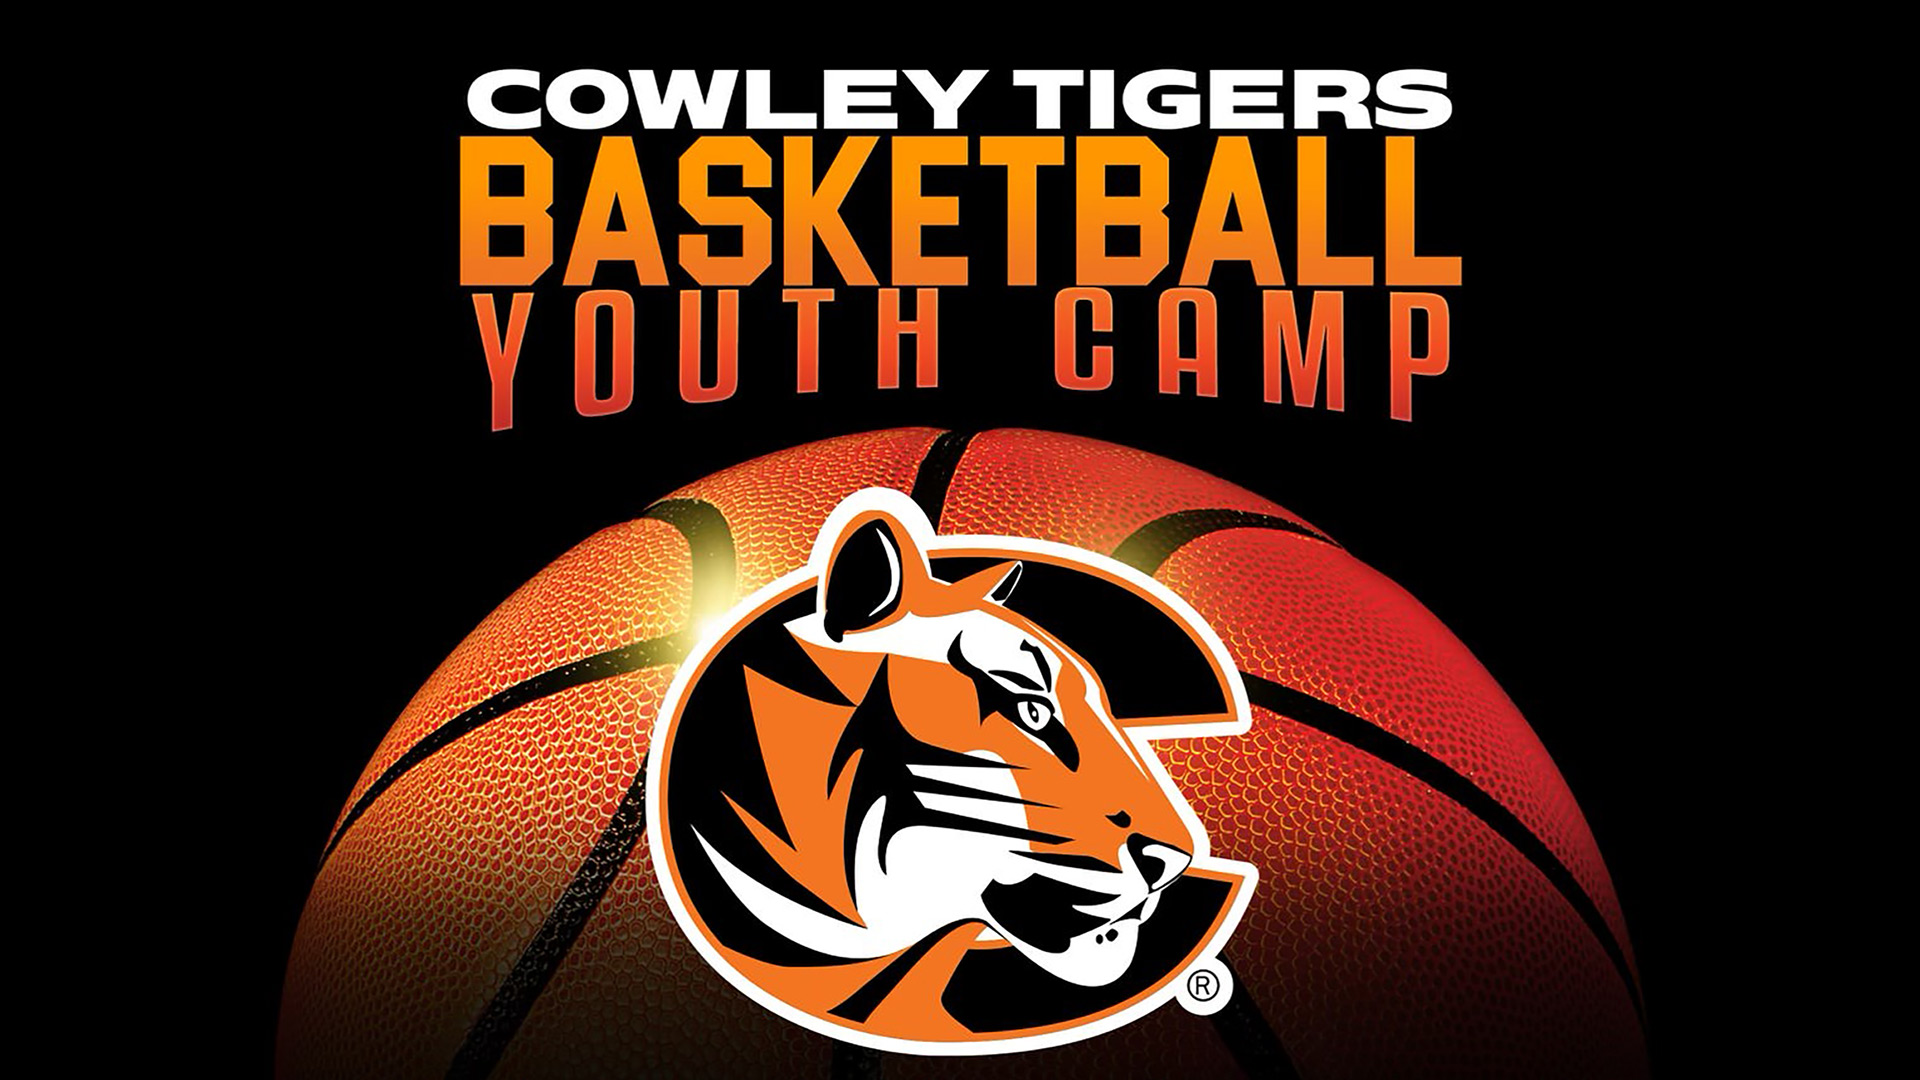 Youth Basketball Camp